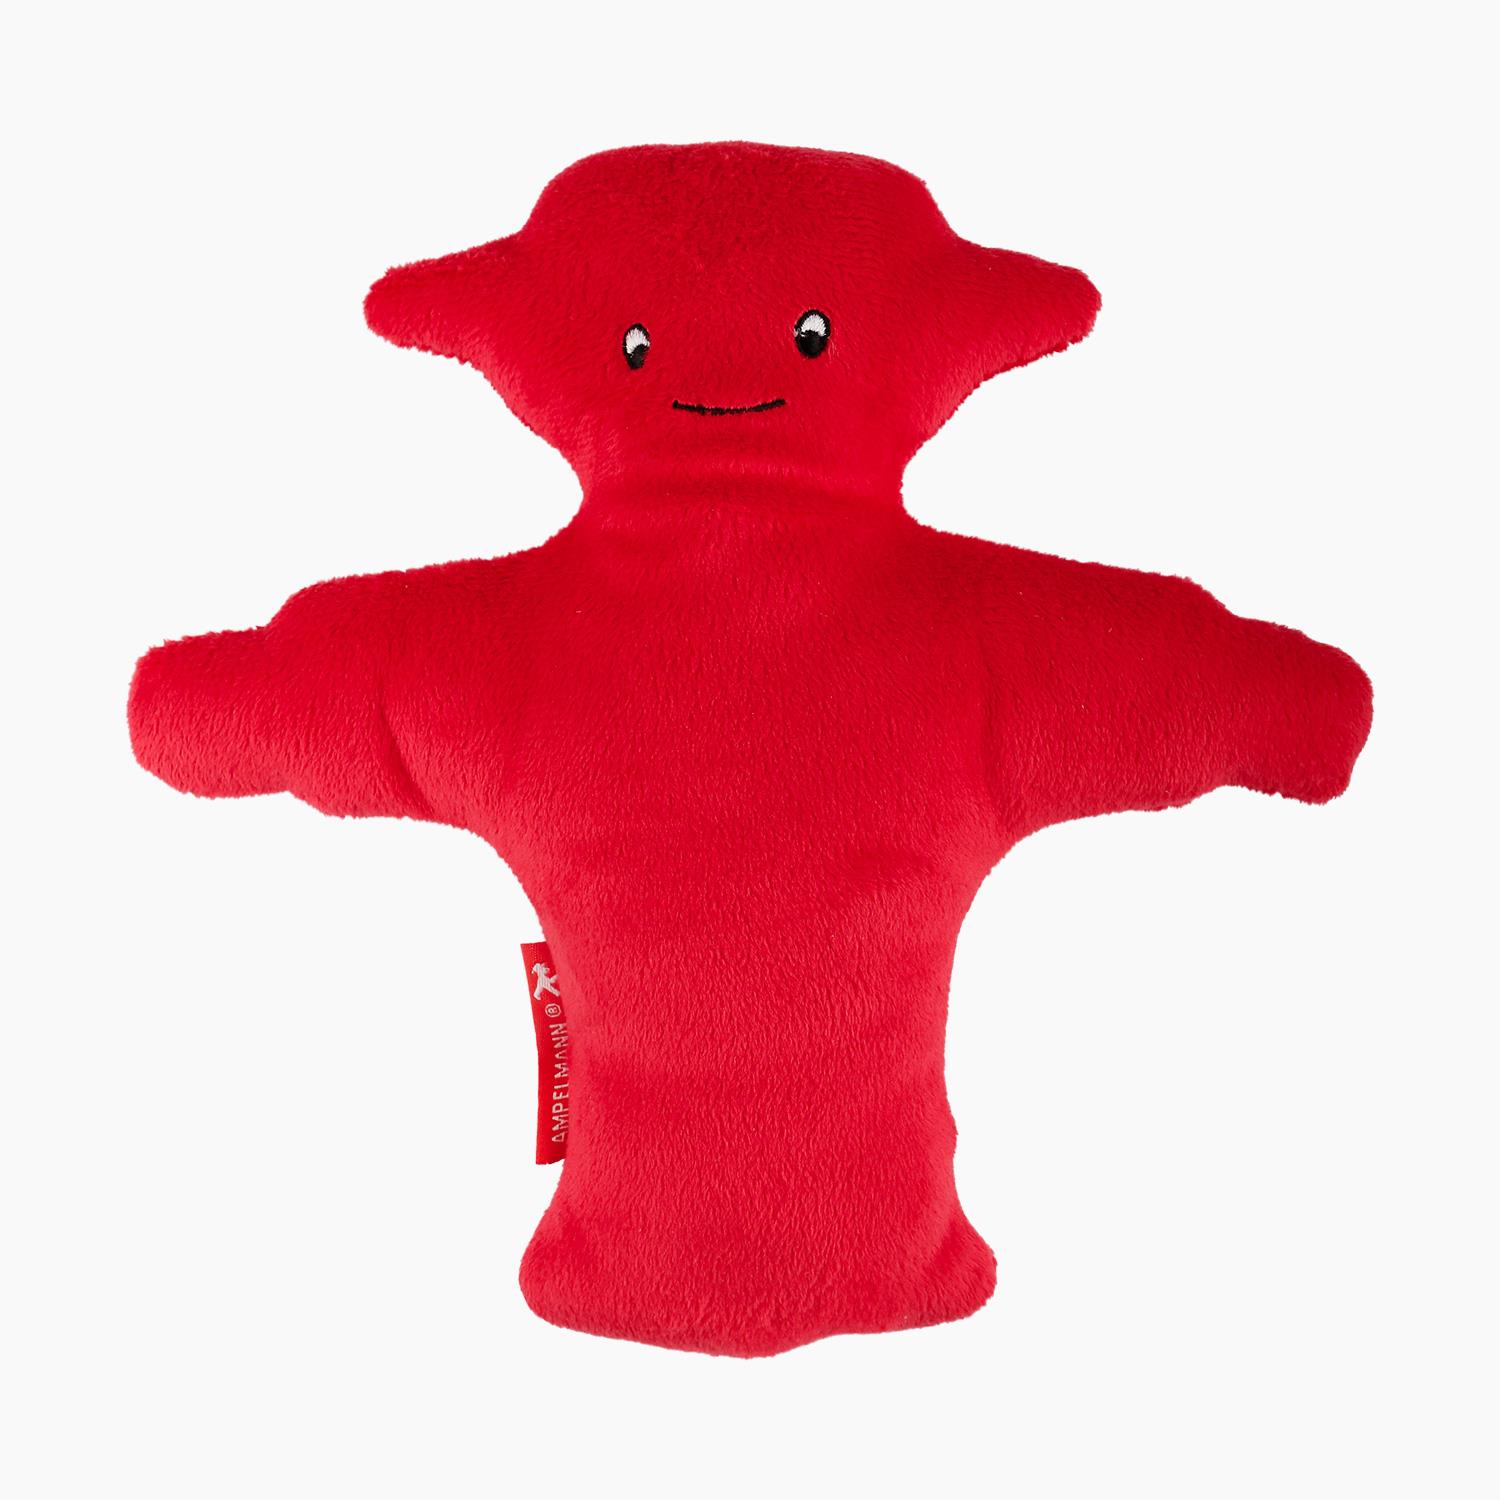 KNUDDELMANN red/ Stuffed Animal